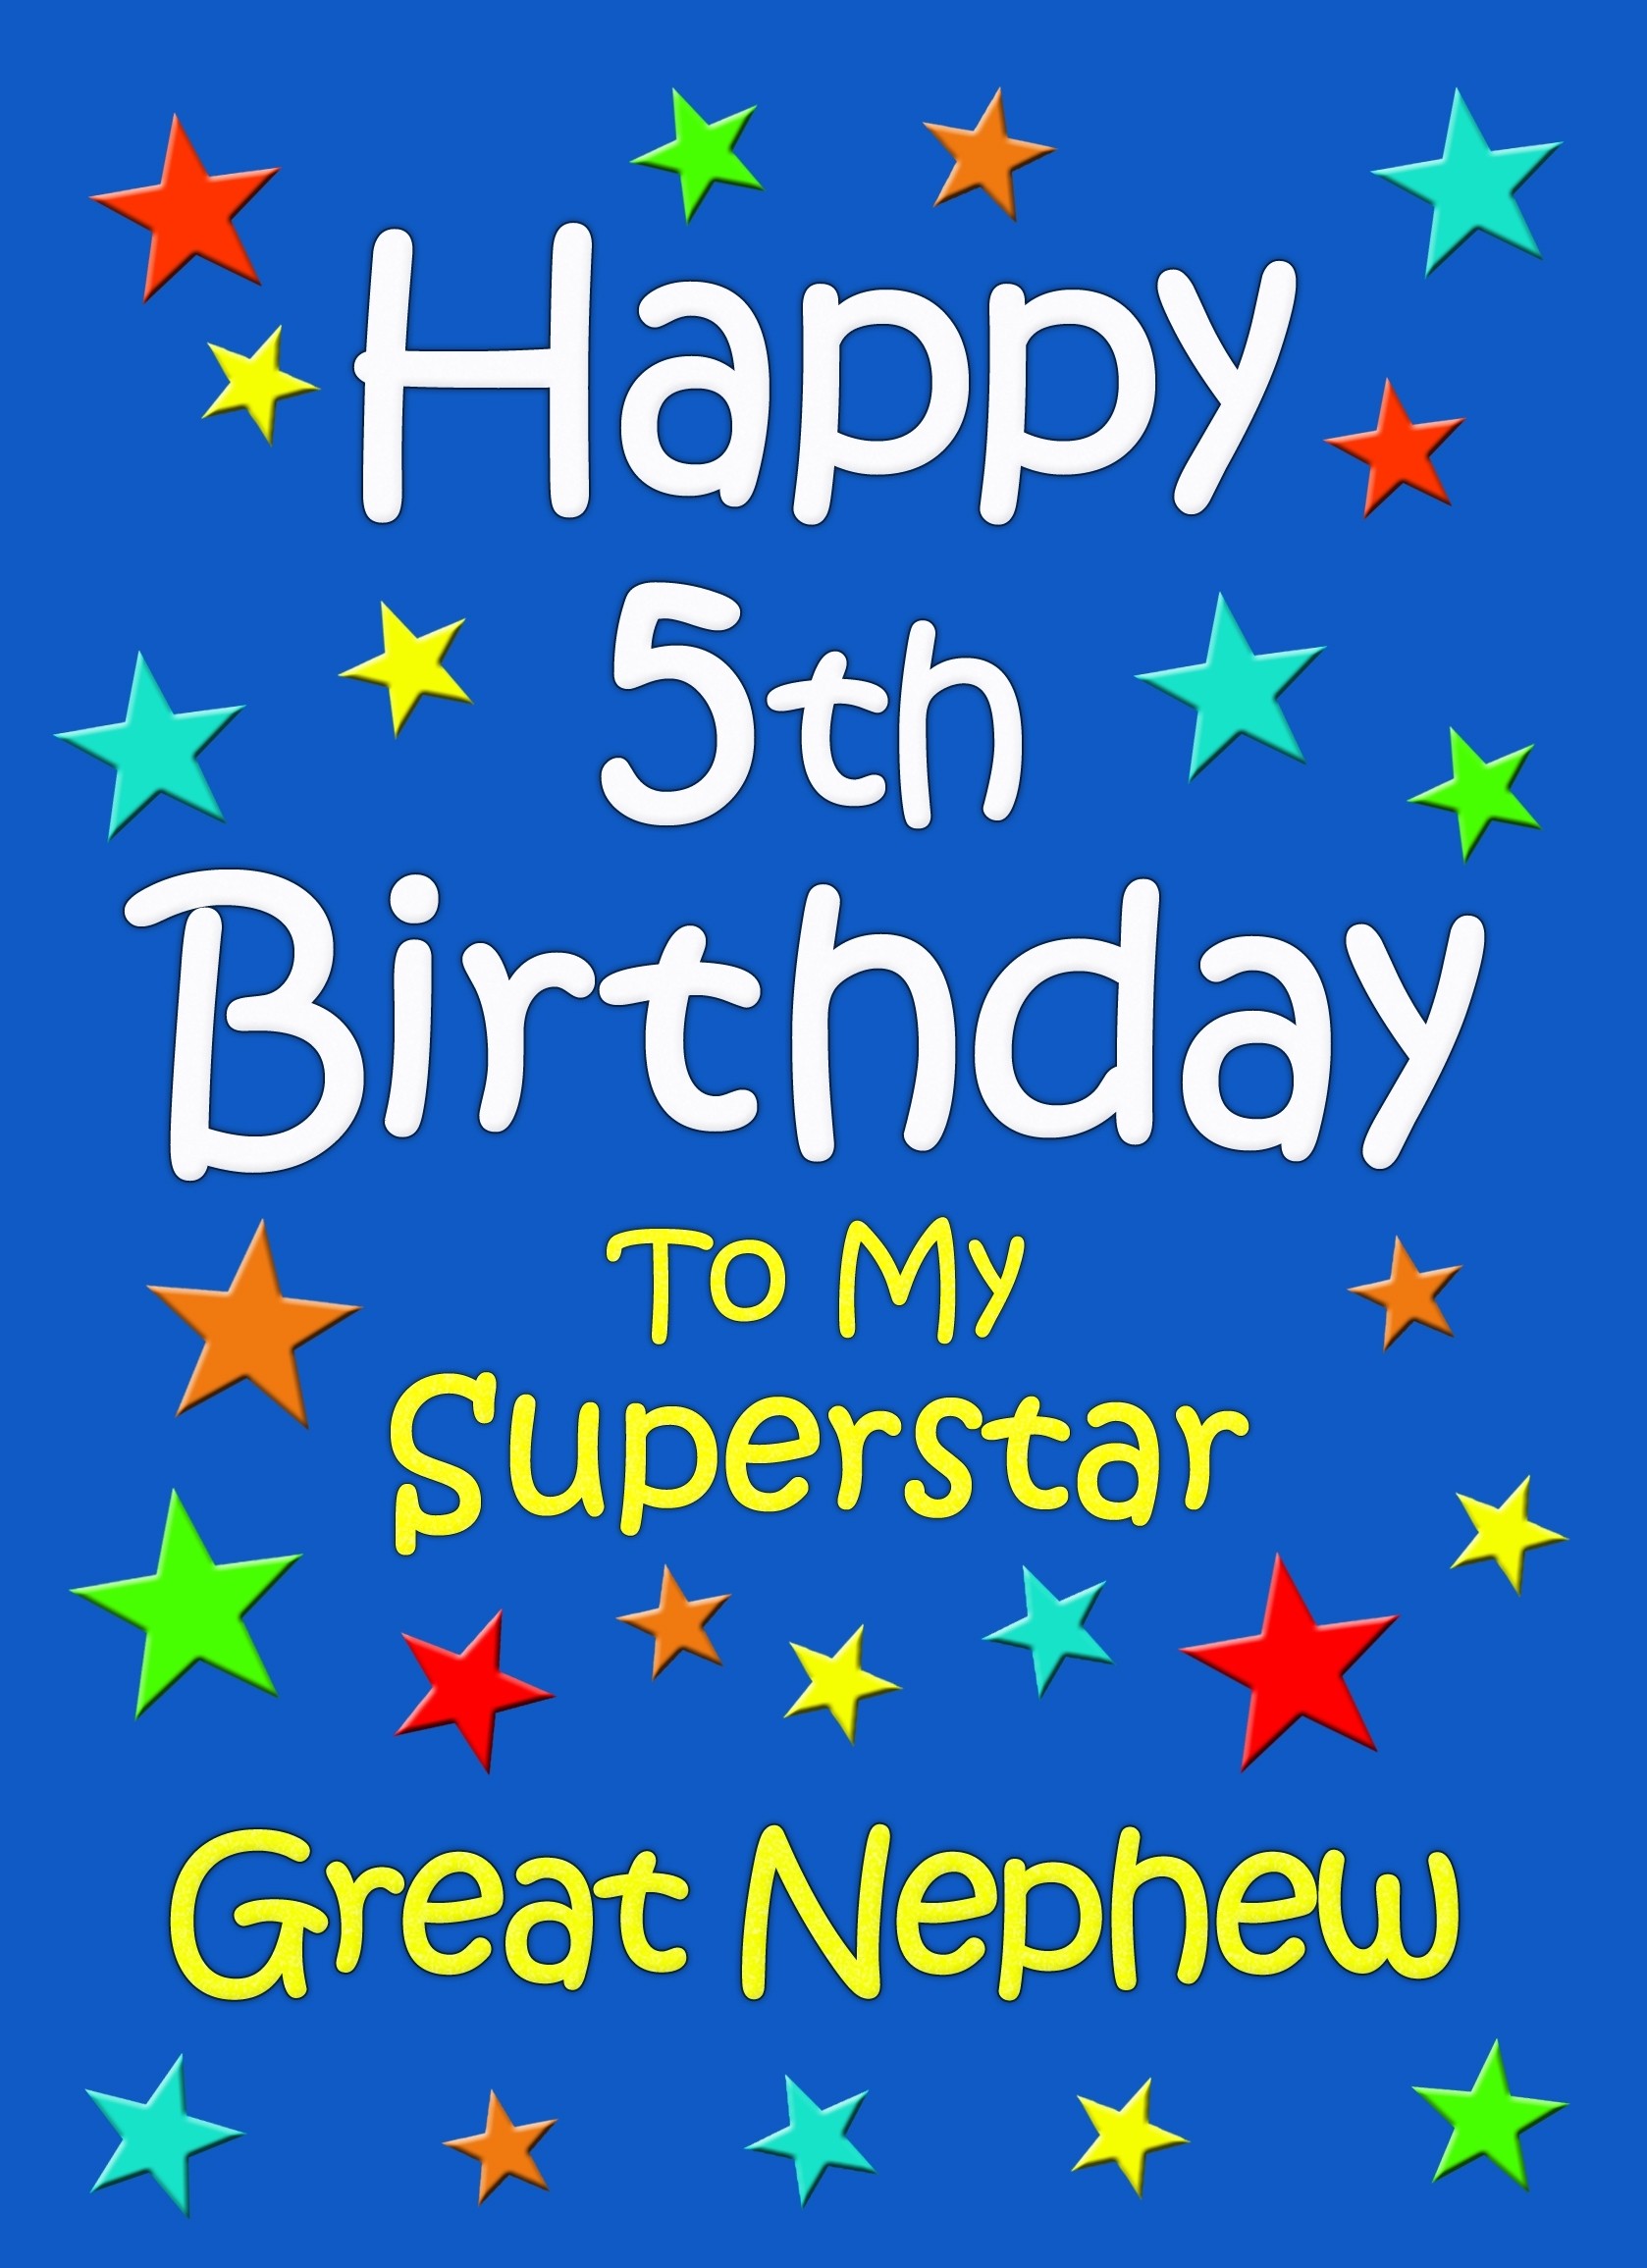 Great Nephew 5th Birthday Card (Blue)